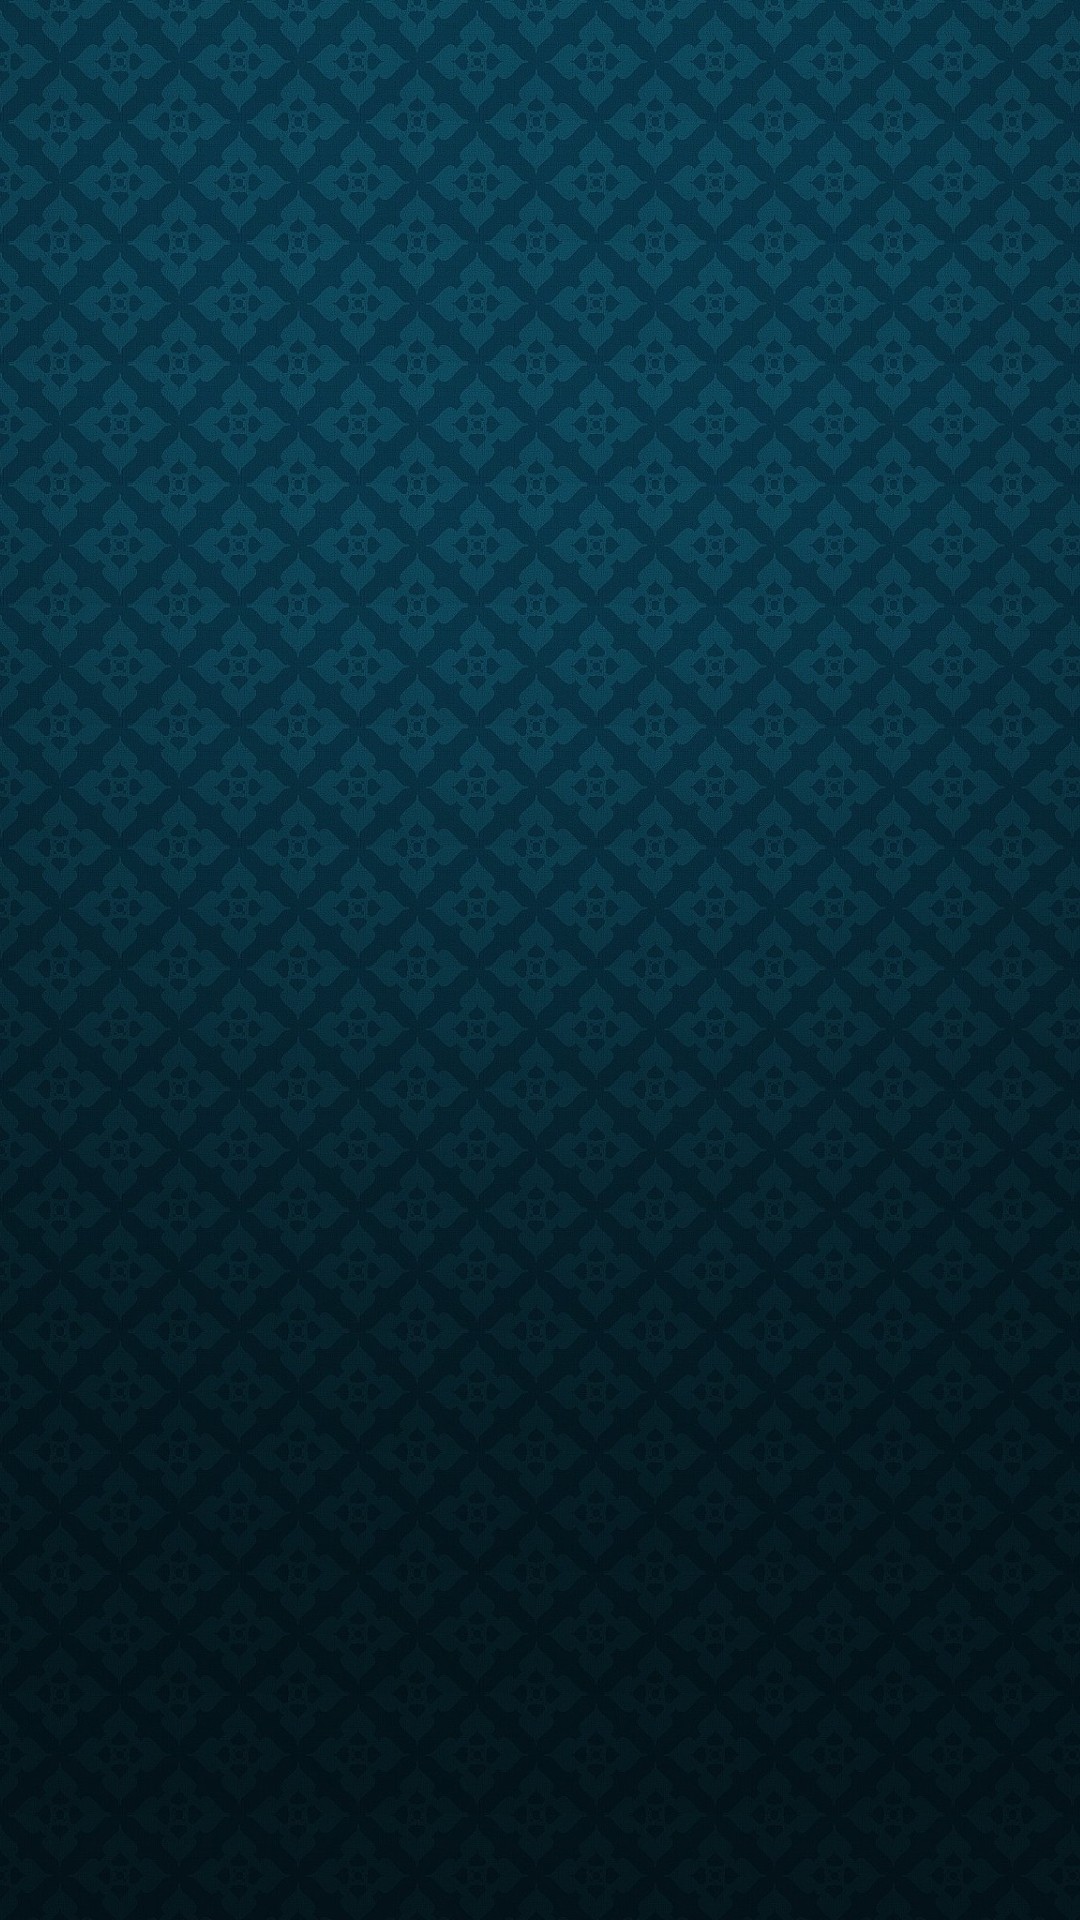 1080x1920 Gallery of Blue Iphone Wallpaper 8211 Nintendo Green Blue Gradation Blur Iphone  6 Wallpaper